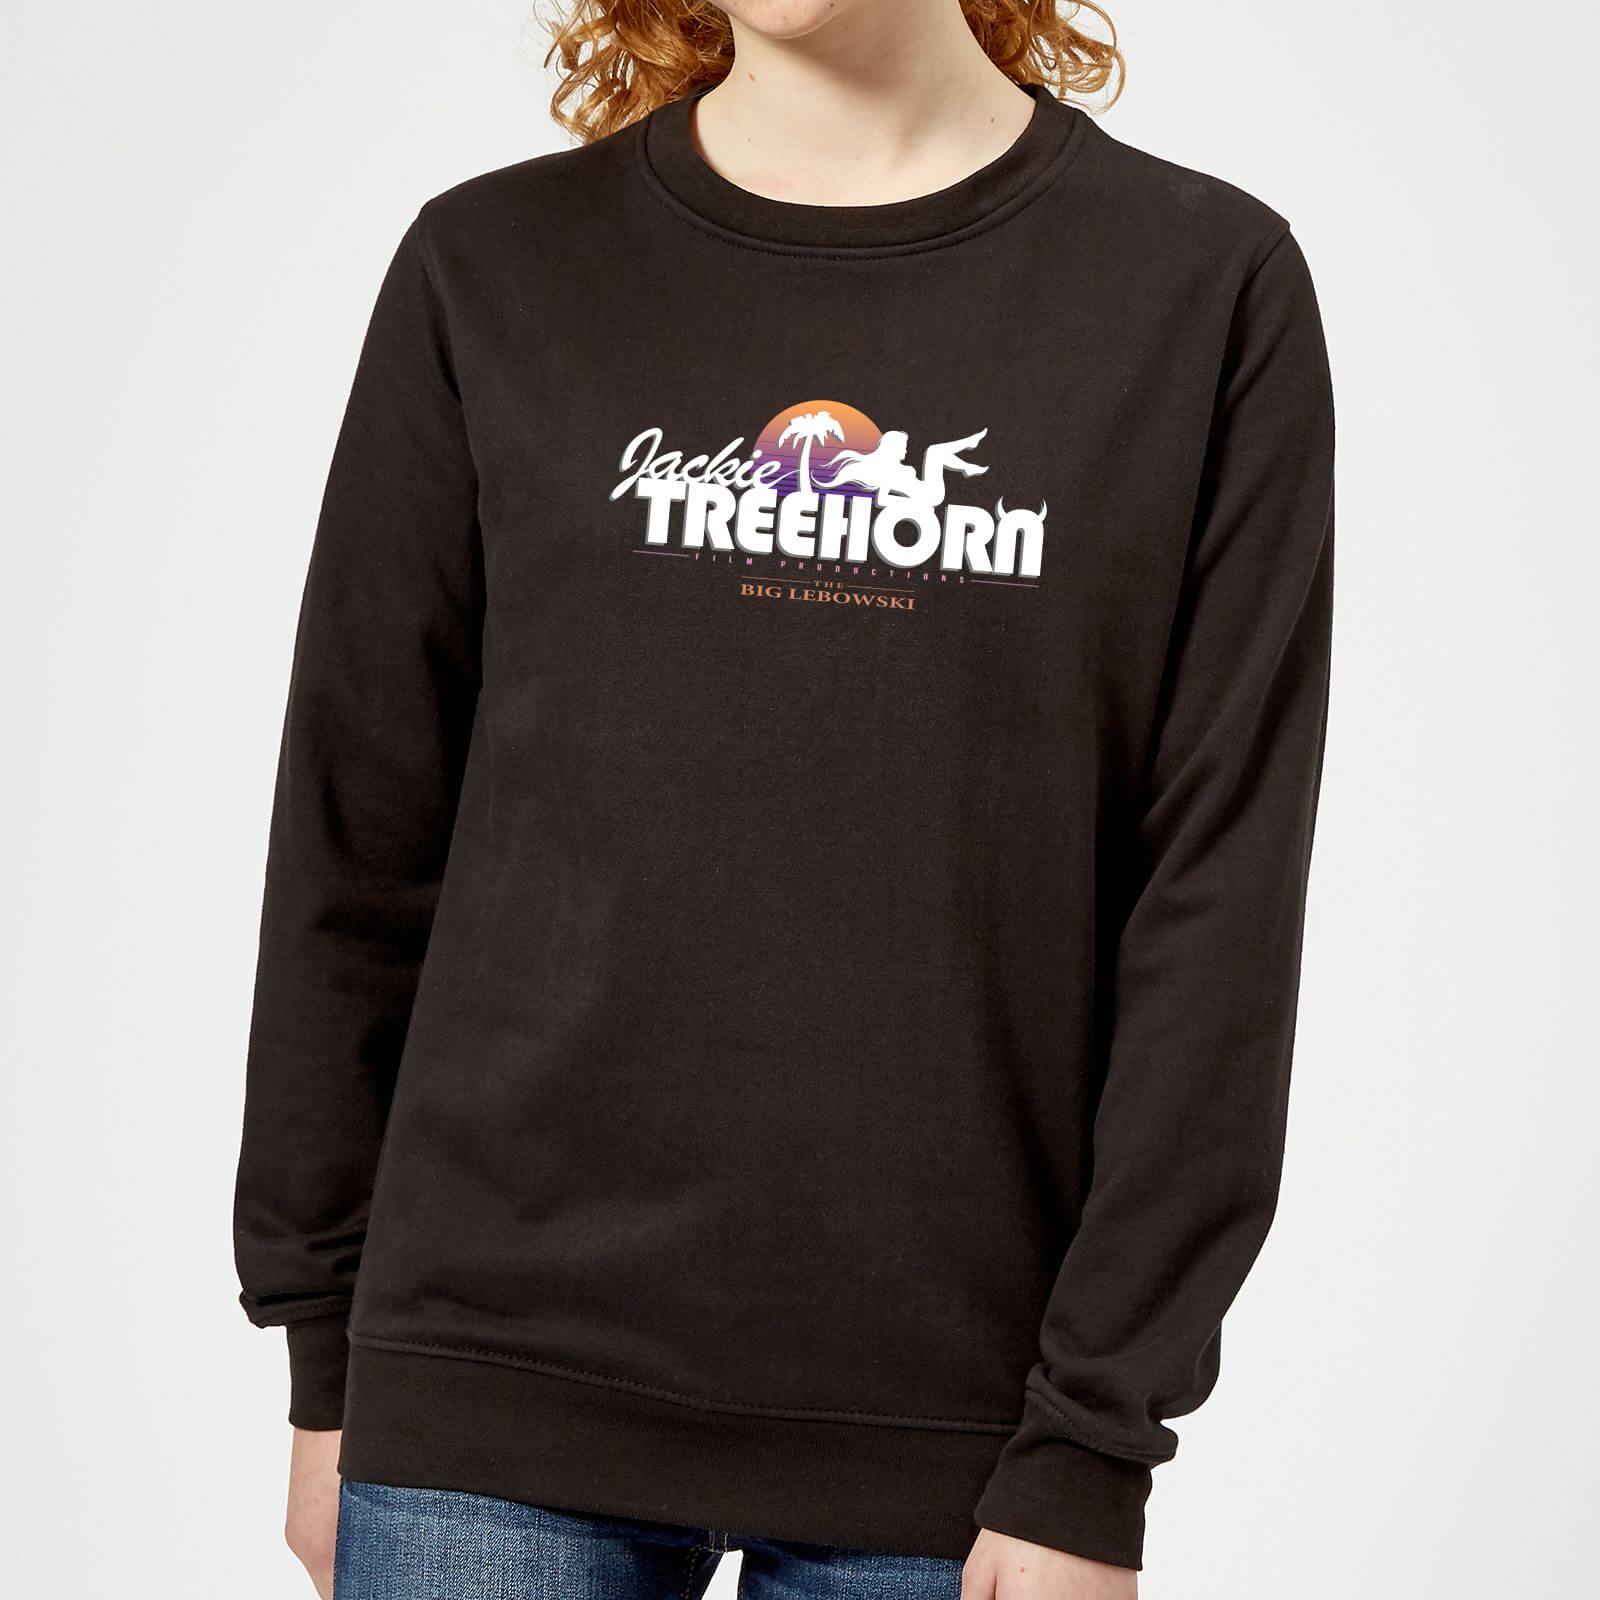 The Big Lebowski Treehorn Logo Women's Sweatshirt - Black - L - Black